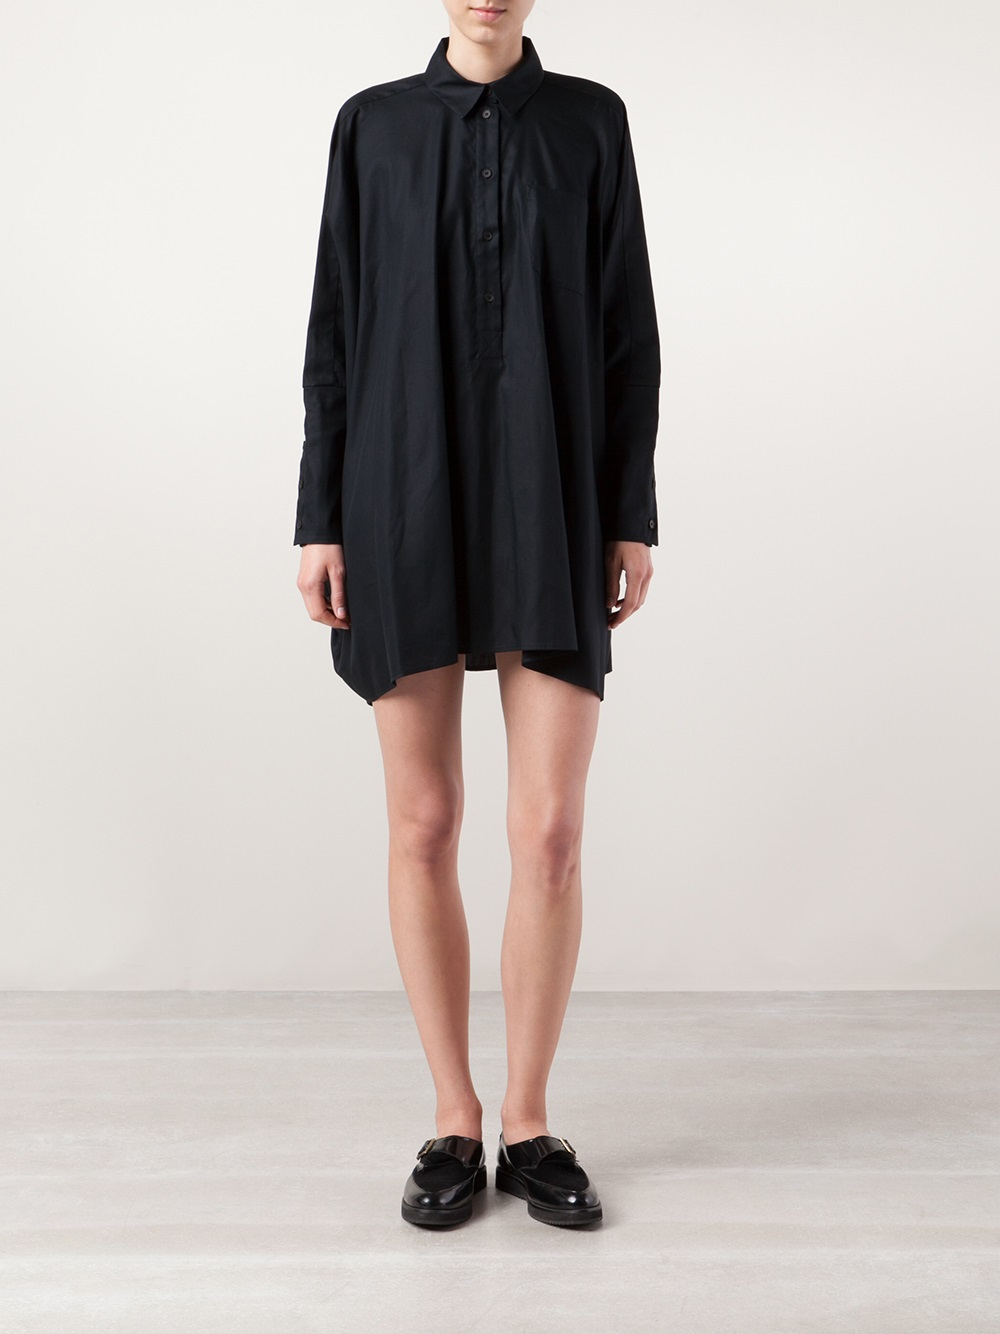 MM6 by Maison Martin Margiela Shirt Dress in Black - Lyst